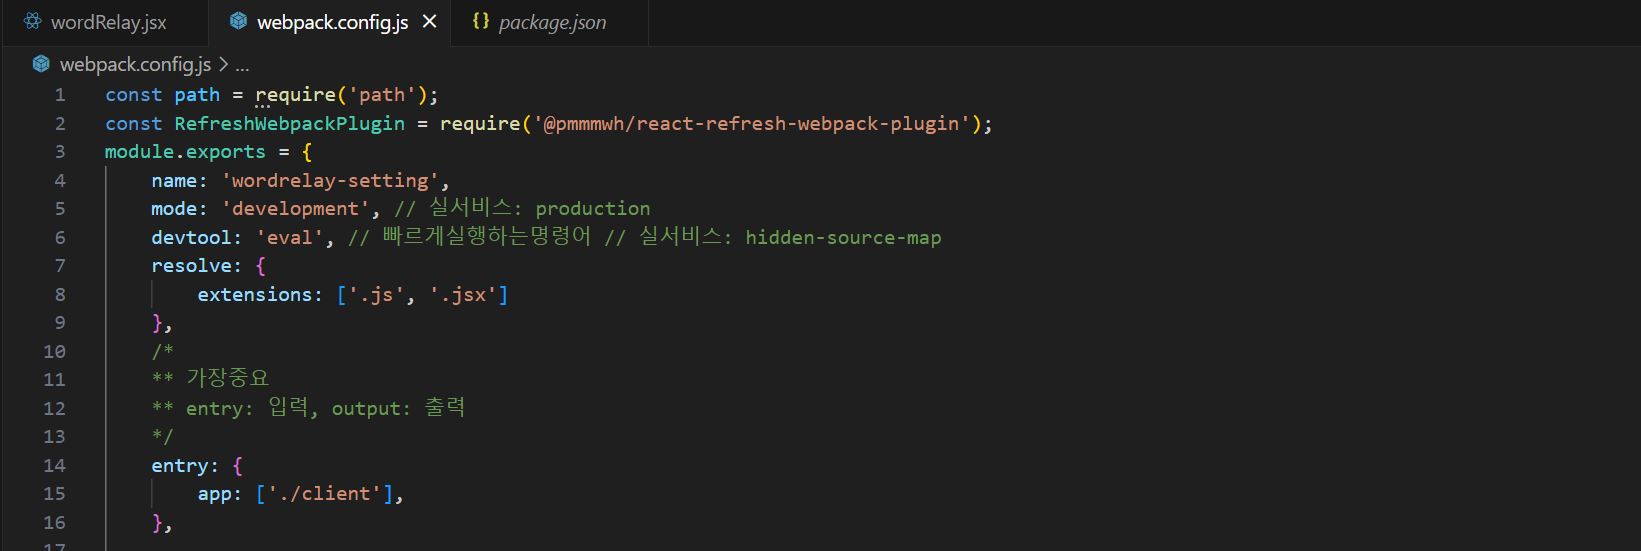 webpack_config_js1.JPG